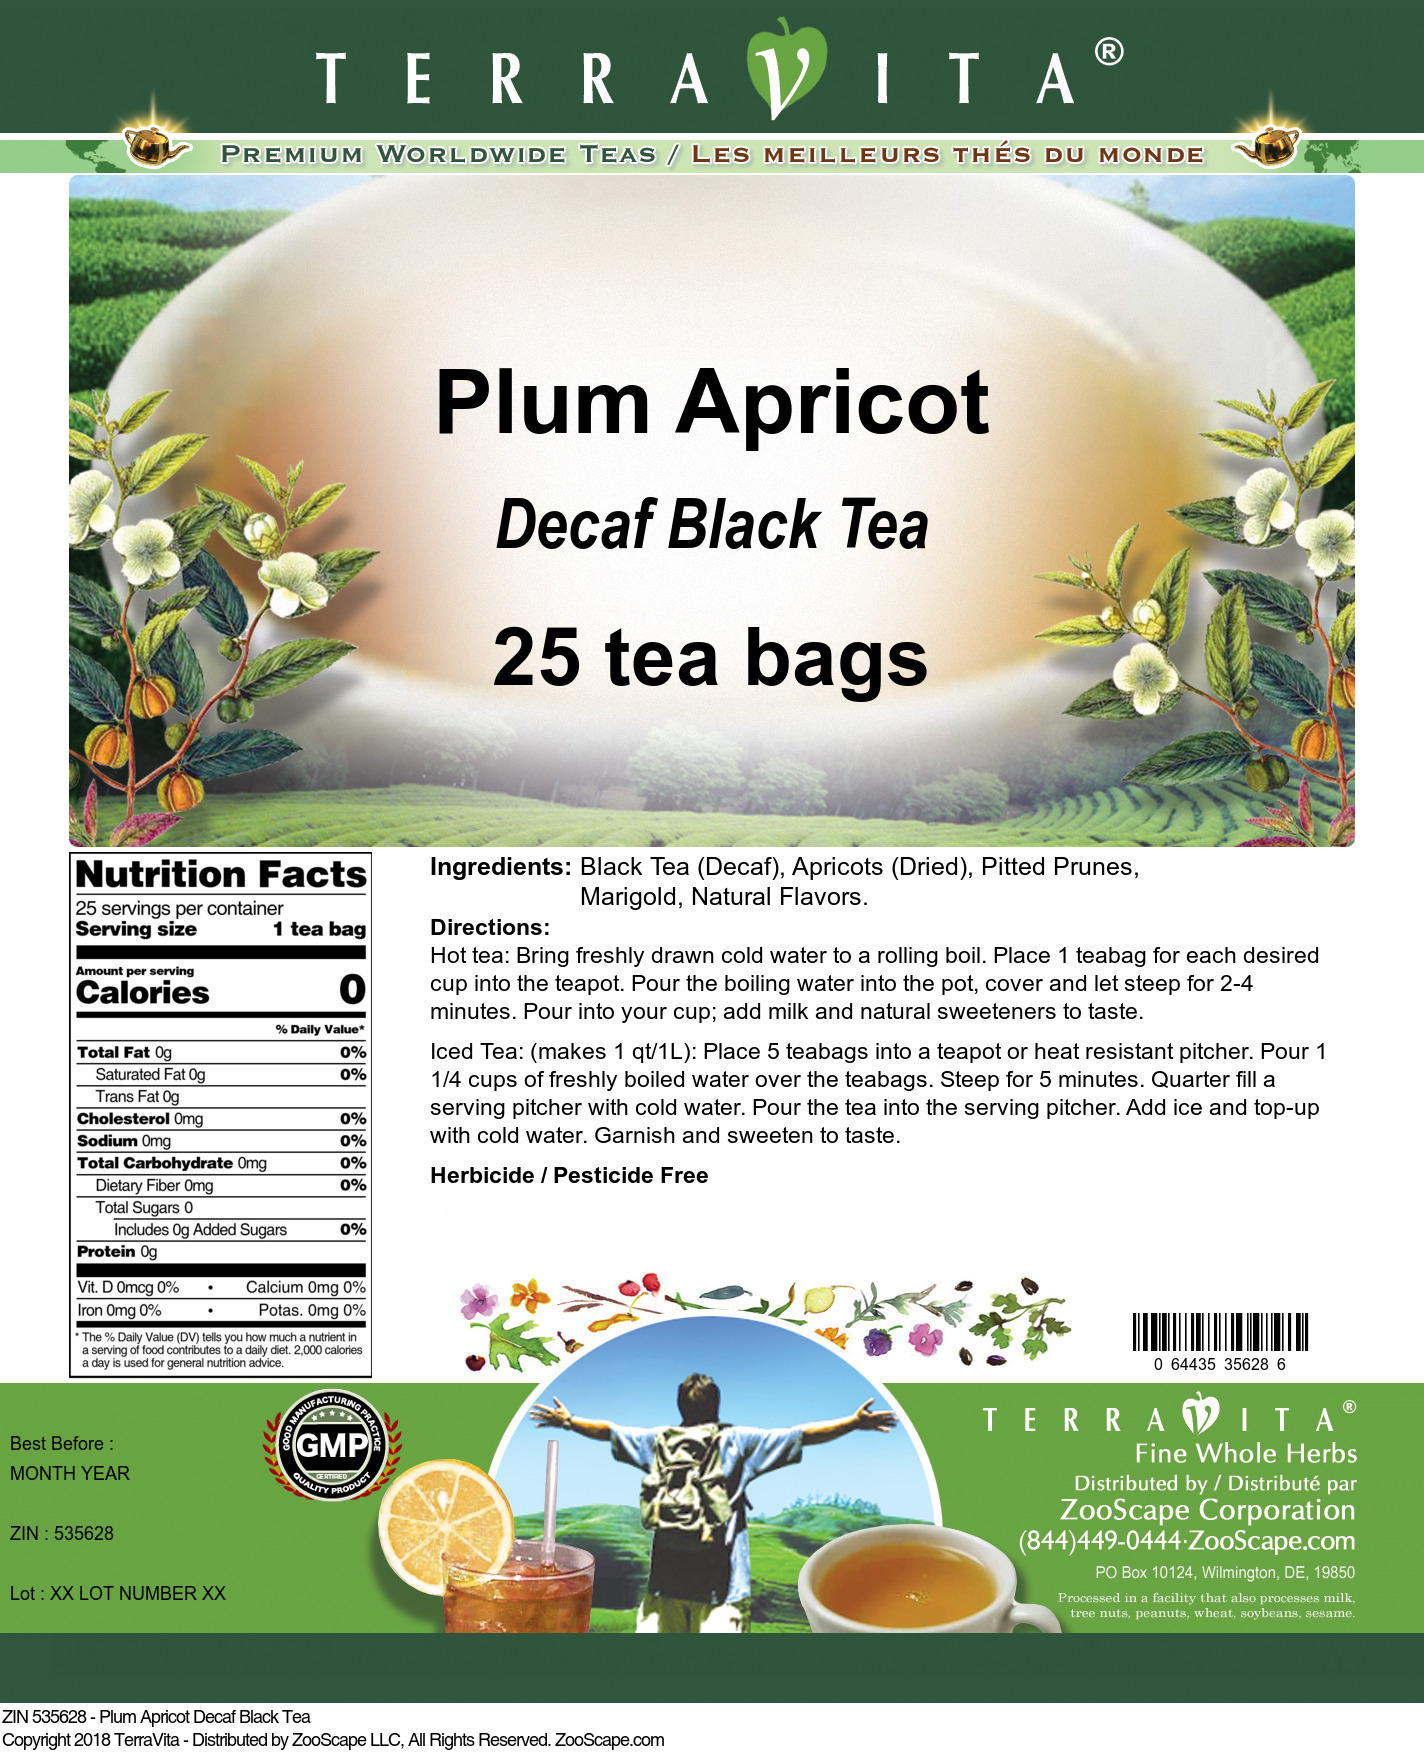 Plum Apricot Decaf Black Tea - Label